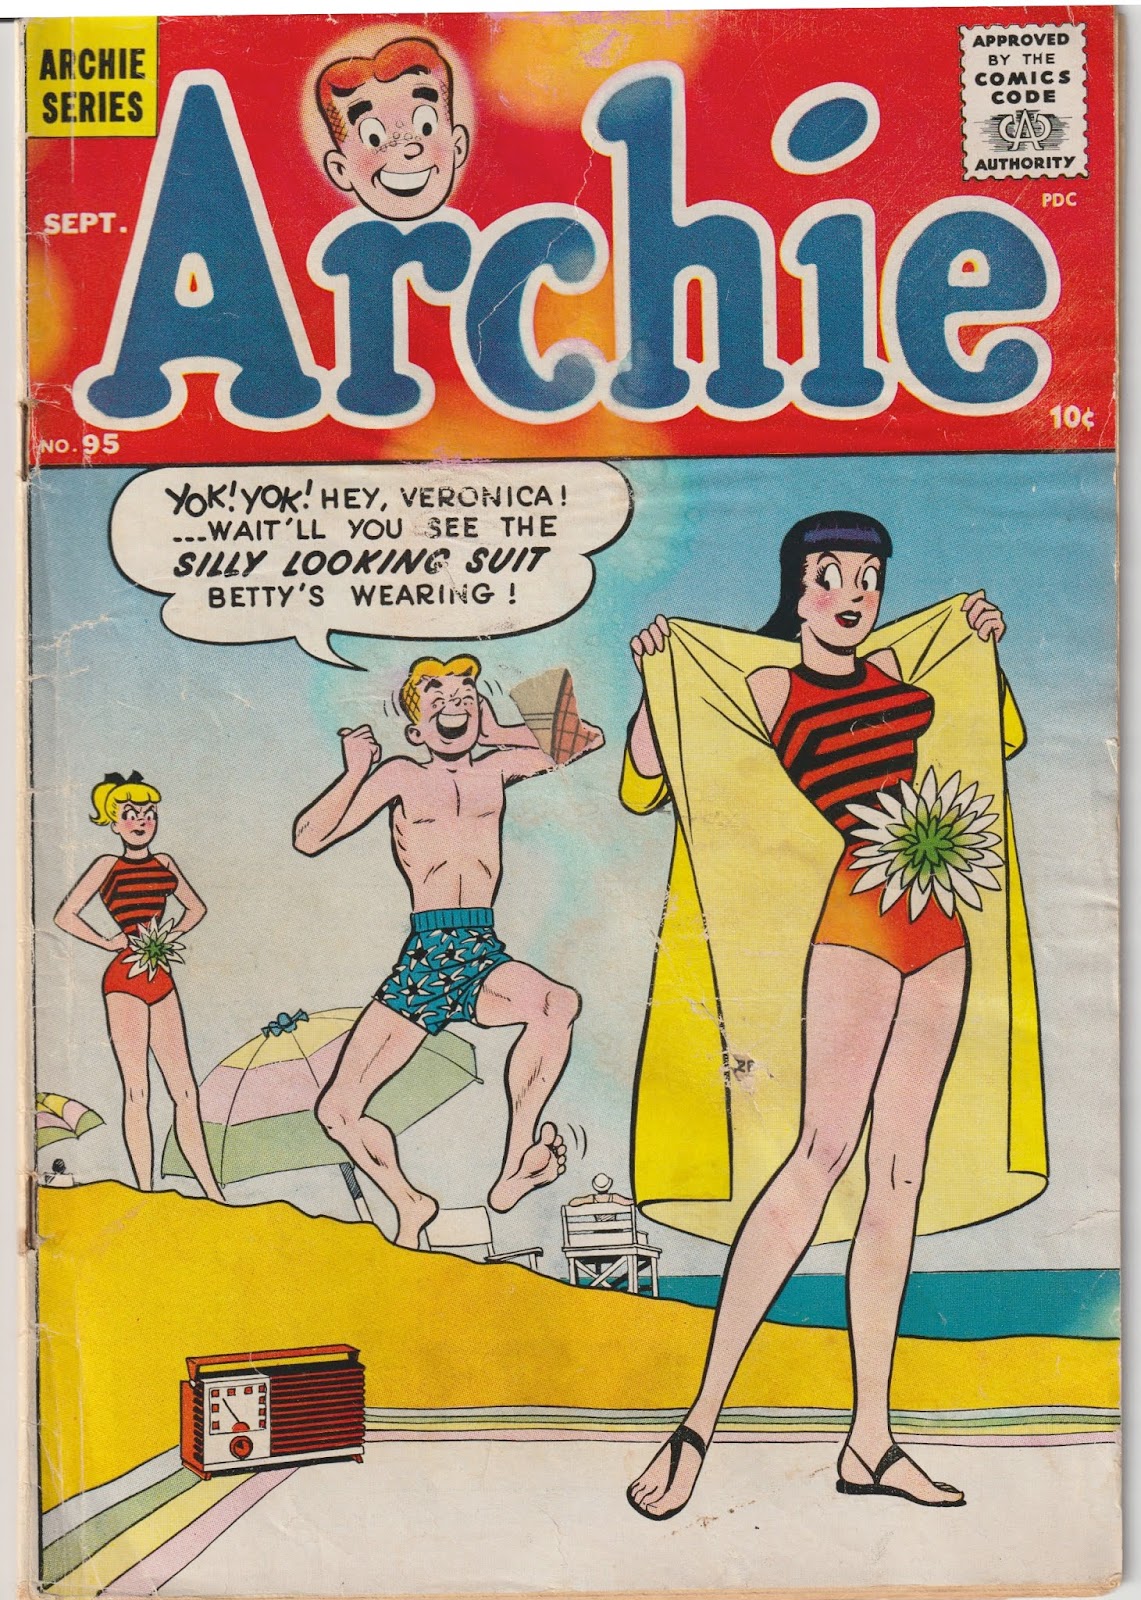 ARCHIE COMICS 95 Classic Artists Of The Era Chuck S Comics CGC